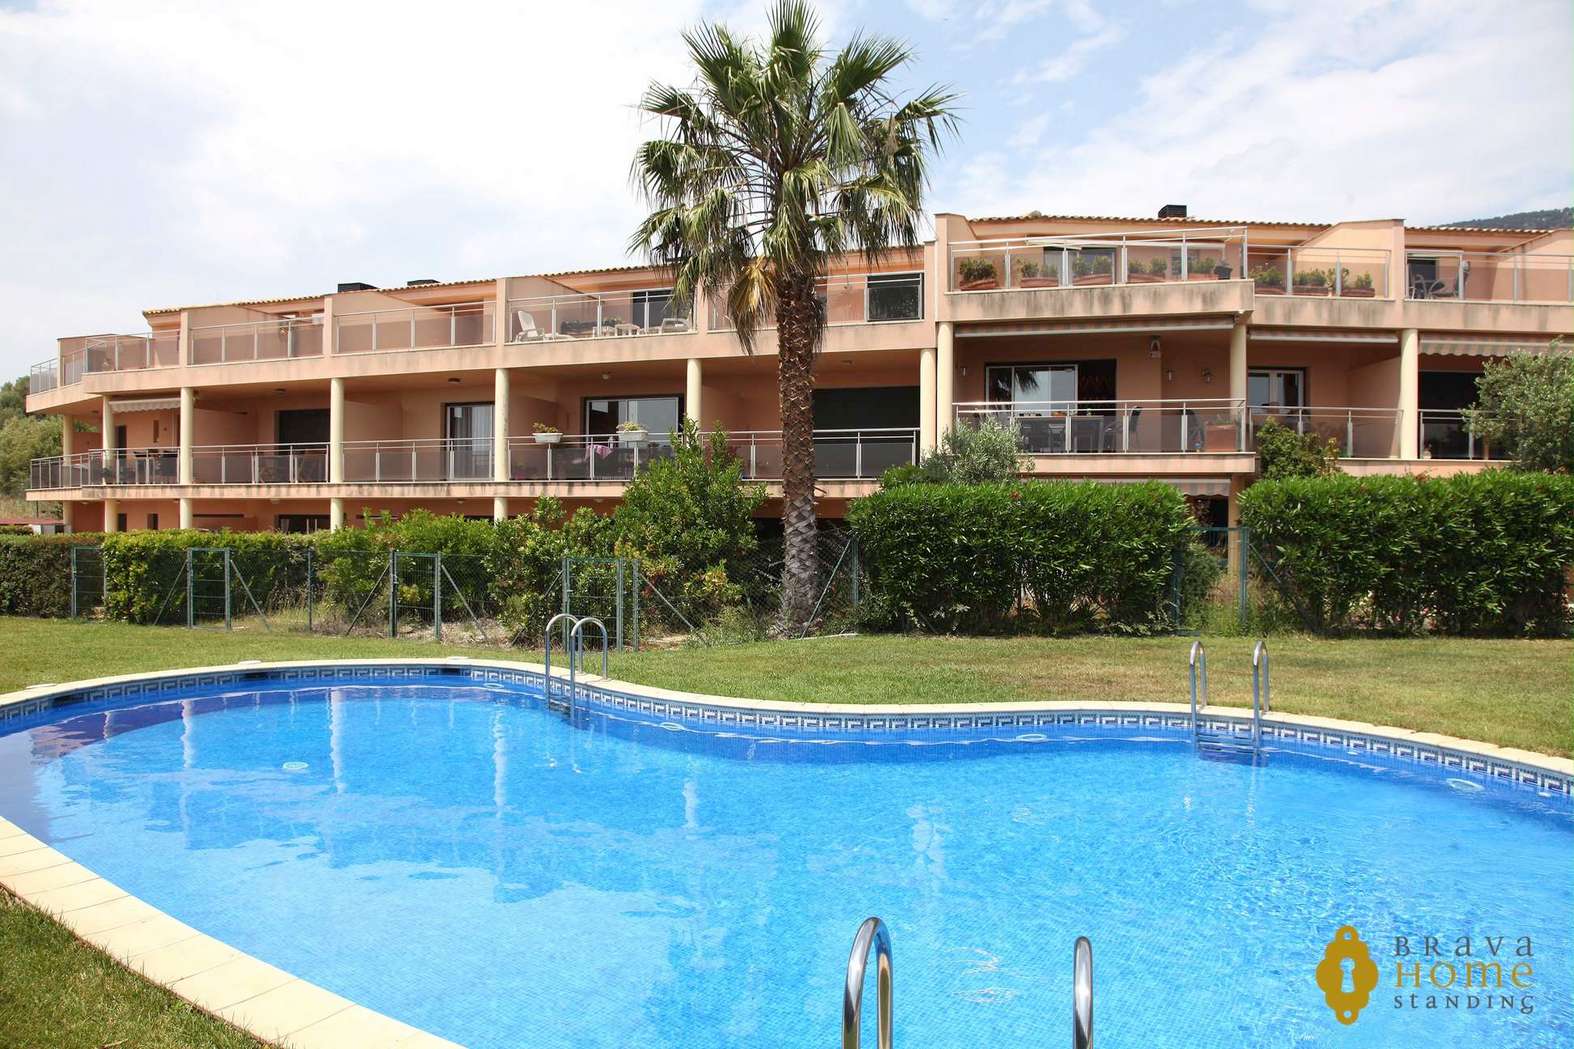 Duplex apartment with pool for sale in Palau Saverdera (Costa Brava)